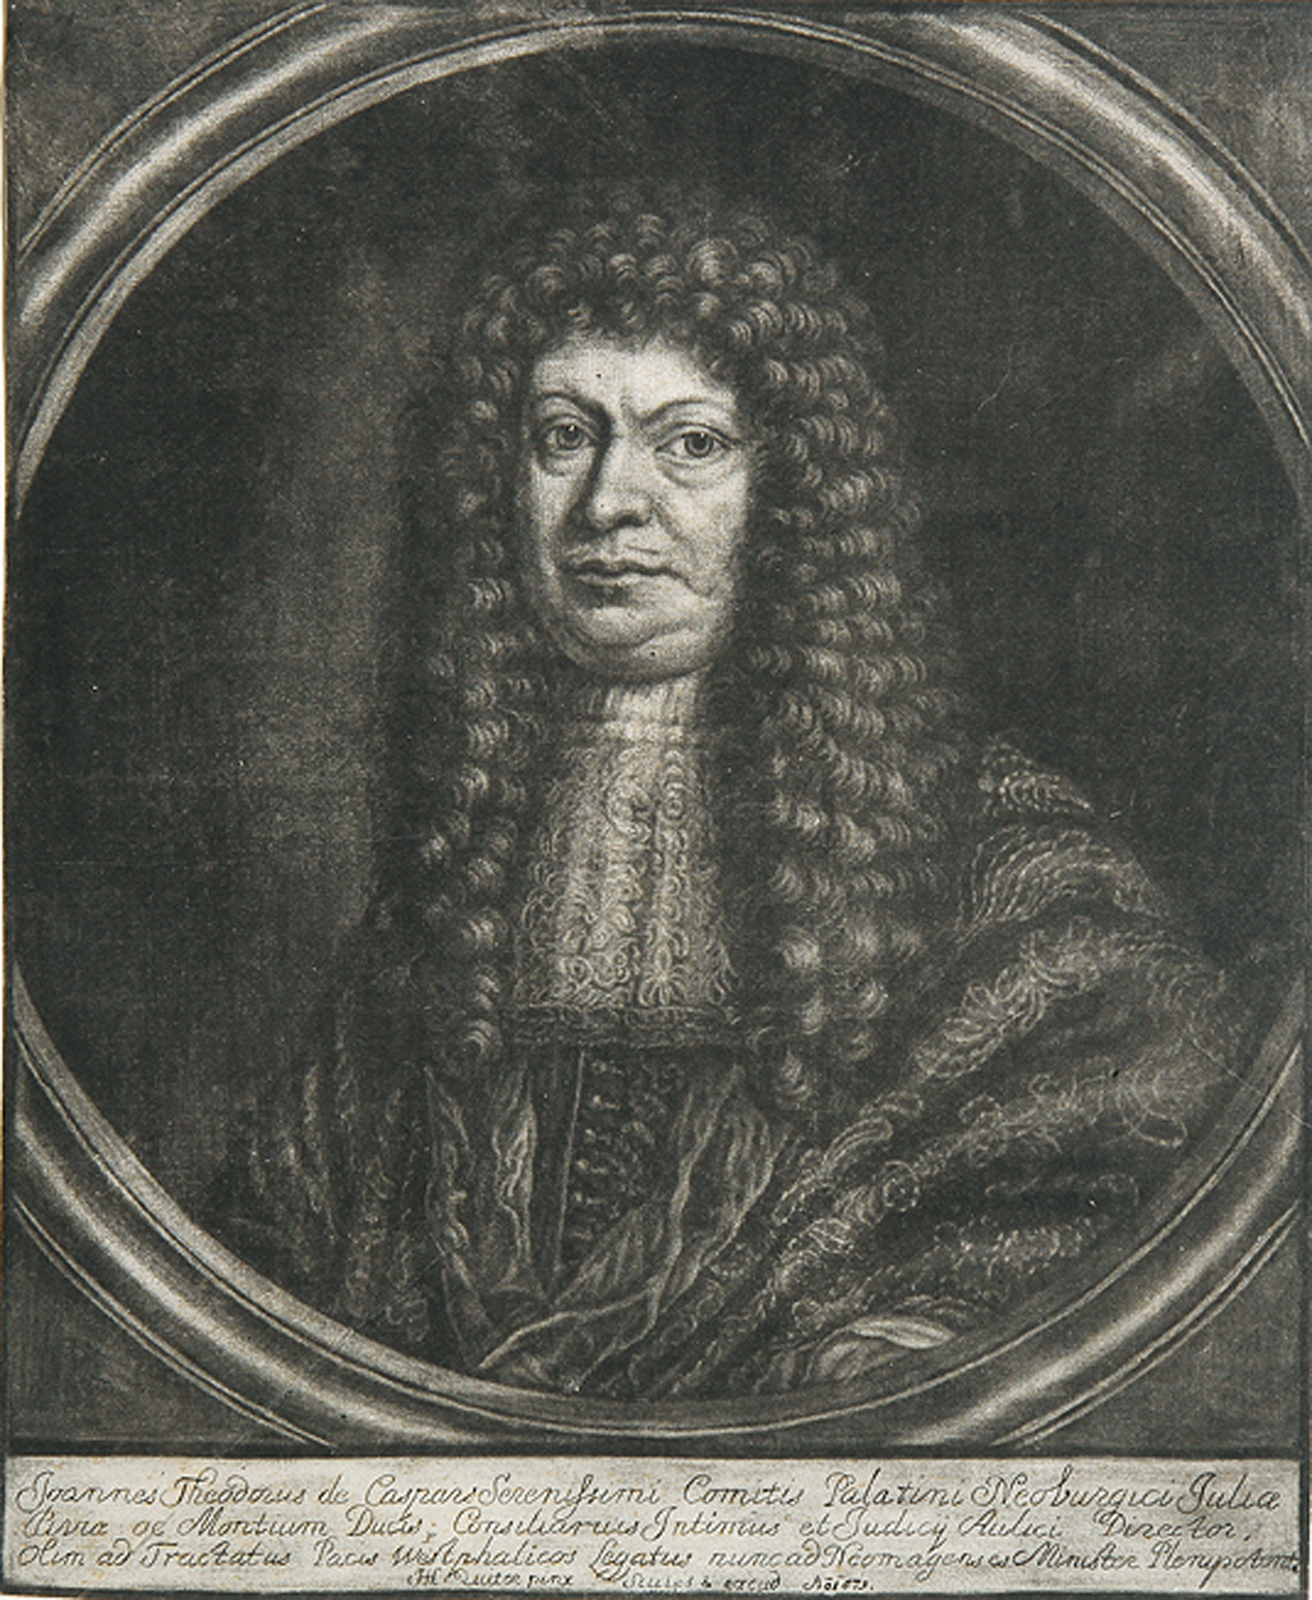 Johann Theodor de Caspari (Caspars).